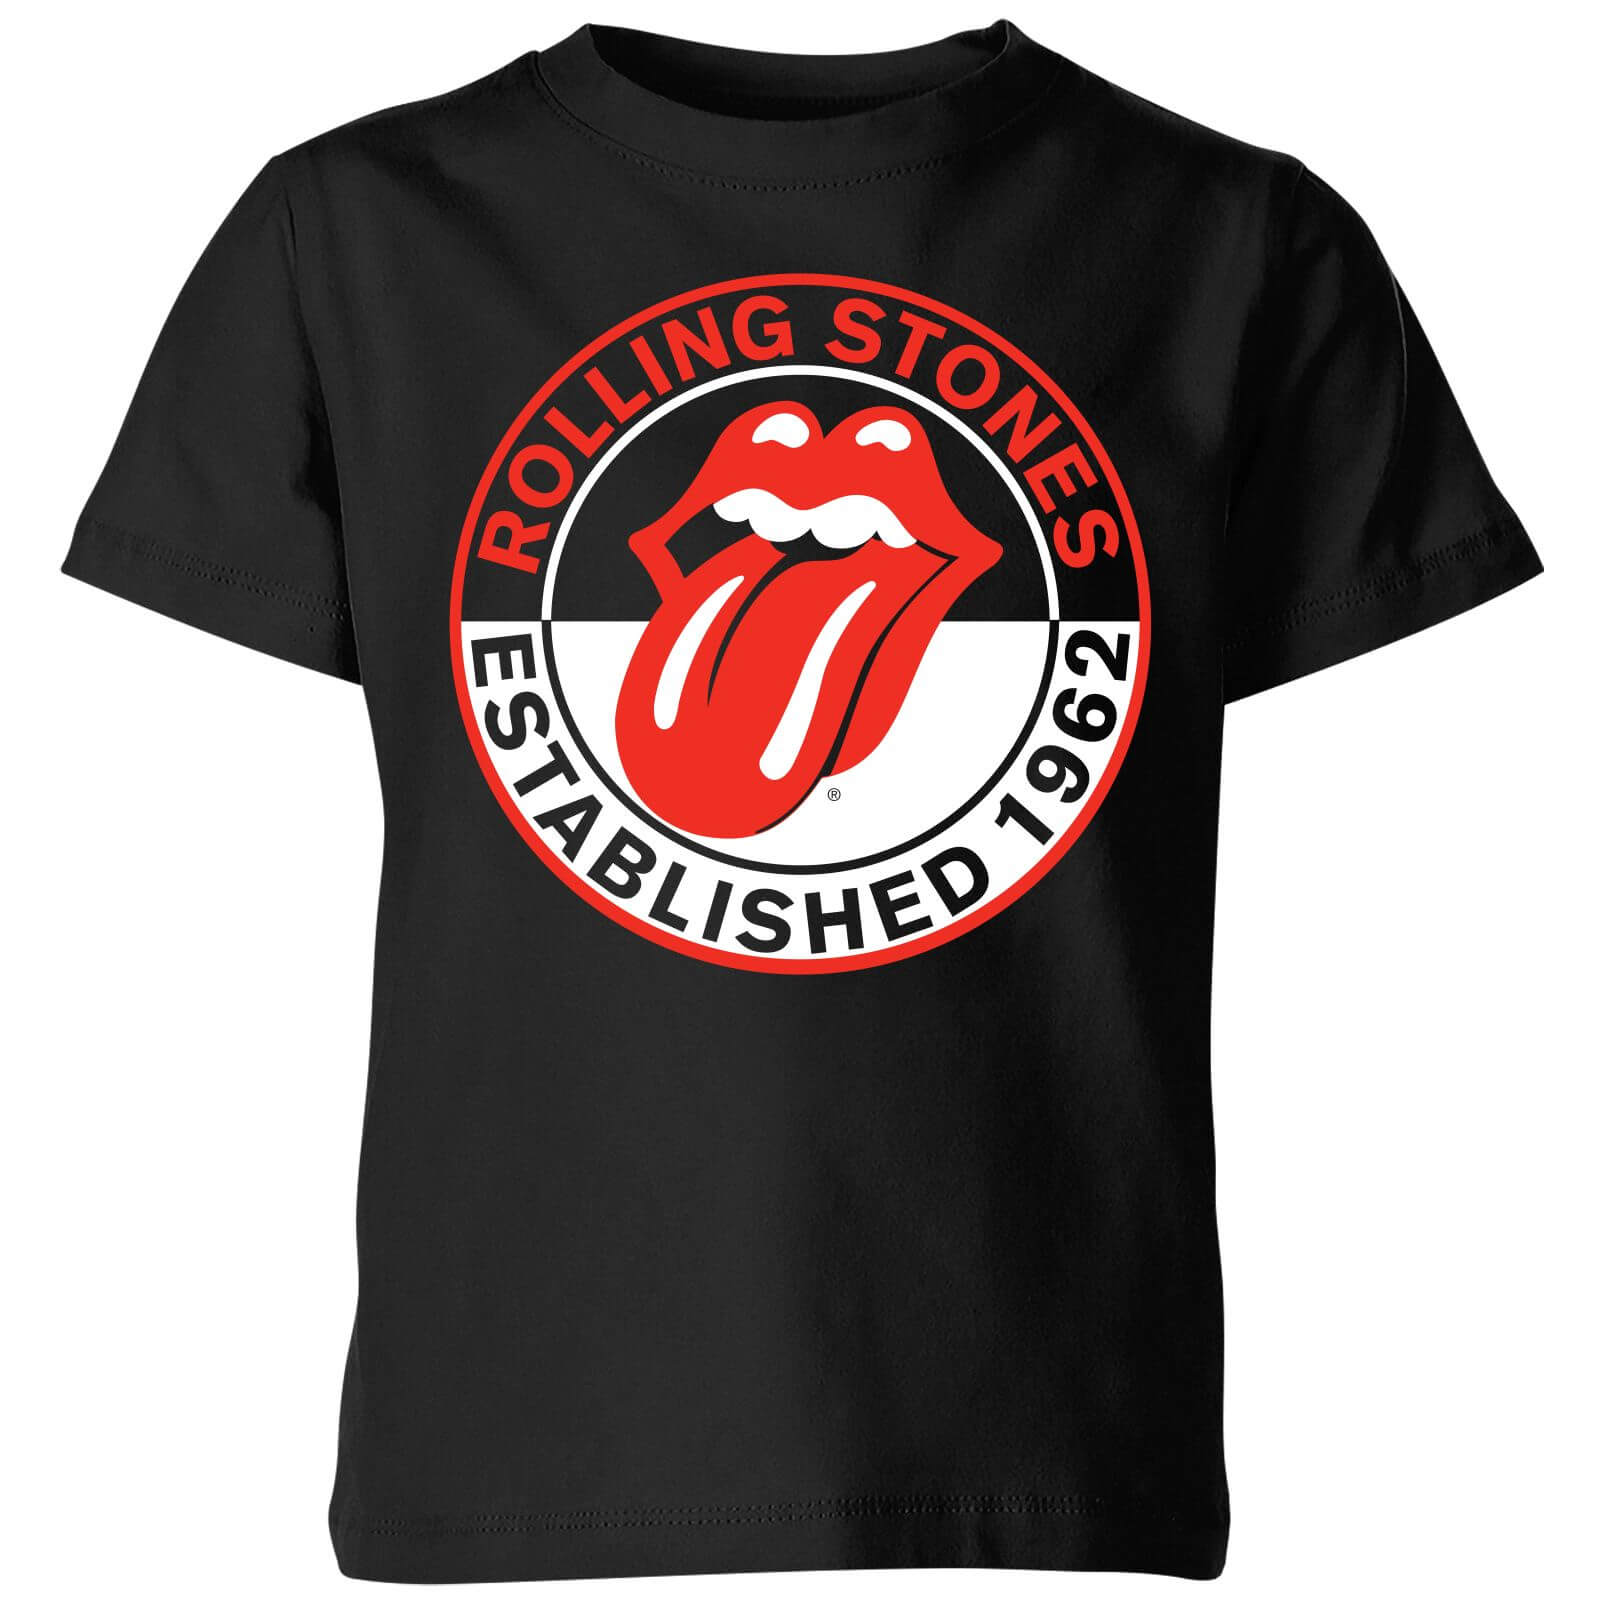 Rolling Stones Est 62 Kids' T-Shirt - Black - 3-4 Years - Black